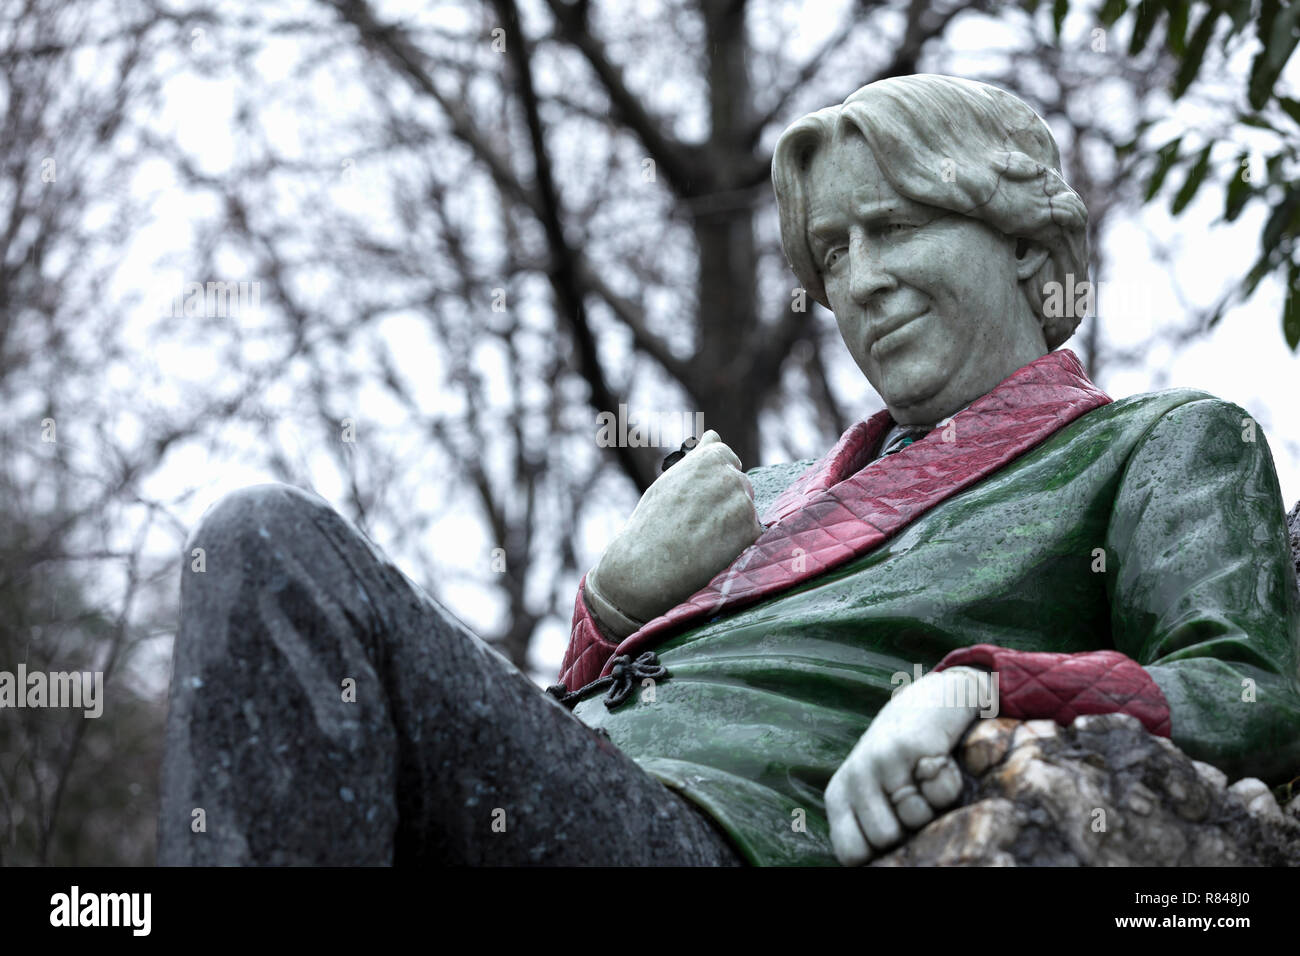 Ireland, Dublin, Merrion Square Park, statue of Oscar Wilde the playwright Stock Photo